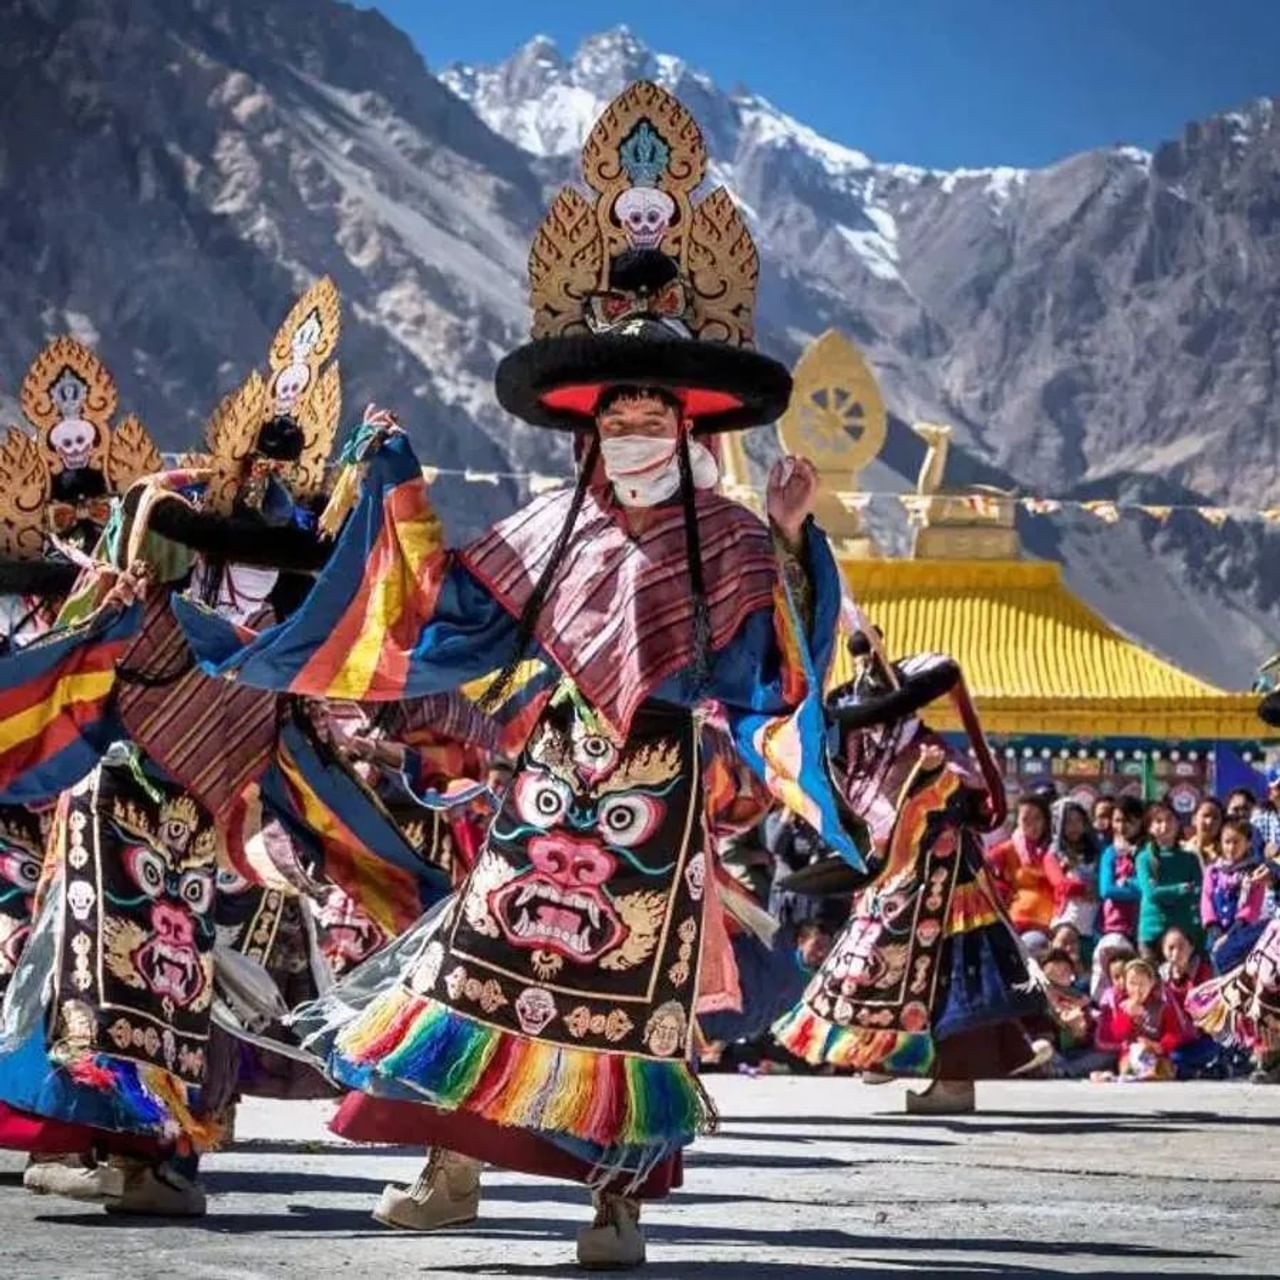 Tibetan New Year Losar 2022: ચીને તેના નવા વર્ષ લોસર પર તિબેટમાં (Tibet) ધાર્મિક પ્રવૃત્તિઓ પર પ્રતિબંધ મૂક્યો છે. તિબેટીયન લોકો તેમના નવા વર્ષનું લોસર (Losar) પર આયોજન કરવામાં અસમર્થ છે. હોંગકોંગ પોસ્ટના અહેવાલ મુજબ ચીનની કોમ્યુનિસ્ટ પાર્ટી તિબેટીયન રાષ્ટ્રીયતાથી નારાજ છે. માનવાધિકારના દમન માટે કુખ્યાત ડ્રેગન વન ચીનની નીતિને લઈને કટ્ટરપંથી છે અને આ પ્રતિબંધને ચીનની આ વ્યૂહરચના સાથે પણ જોડવામાં આવી રહ્યો છે. જો લોસરની ઉજવણી કરવામાં આવી હોત તો તિબેટનો રંગ અલગ હોત, પરંતુ ચીનના પ્રતિબંધને કારણે આખો રંગ ફિક્કો પડી ગયો છે. 